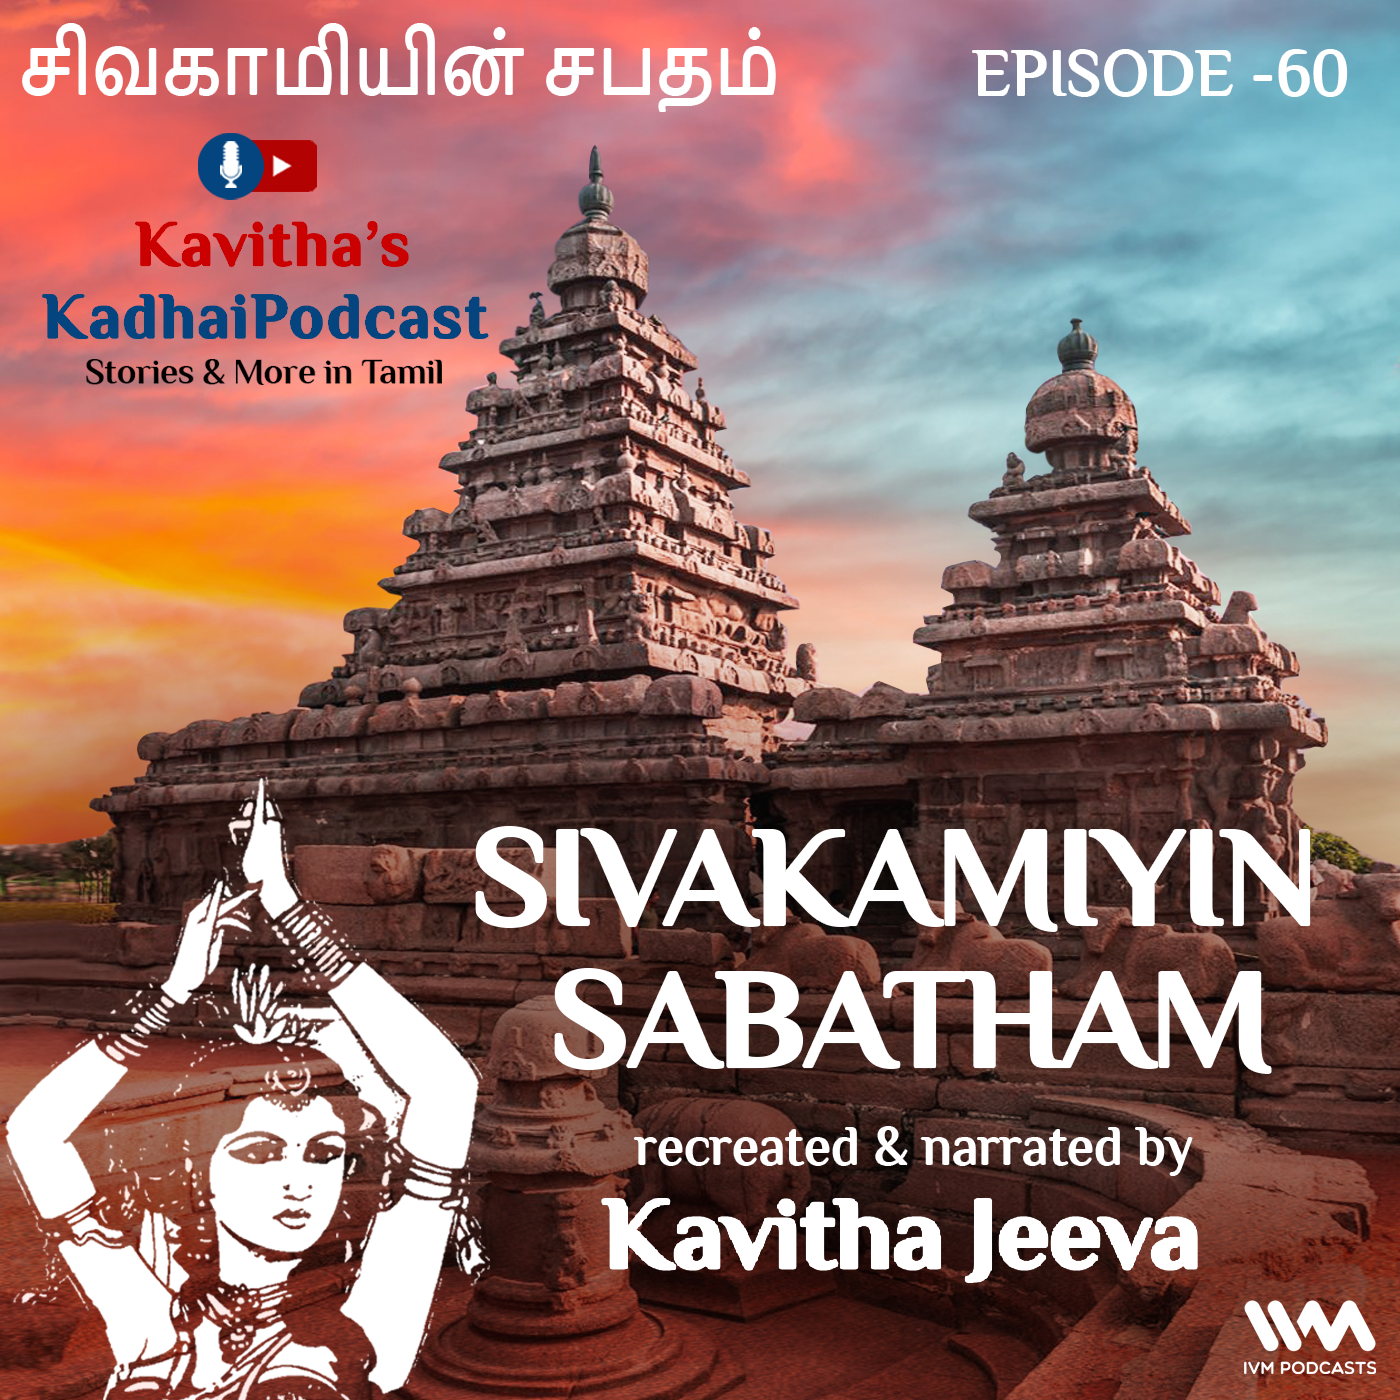 KadhaiPodcast's Sivakamiyin Sabatham - Episode # 60